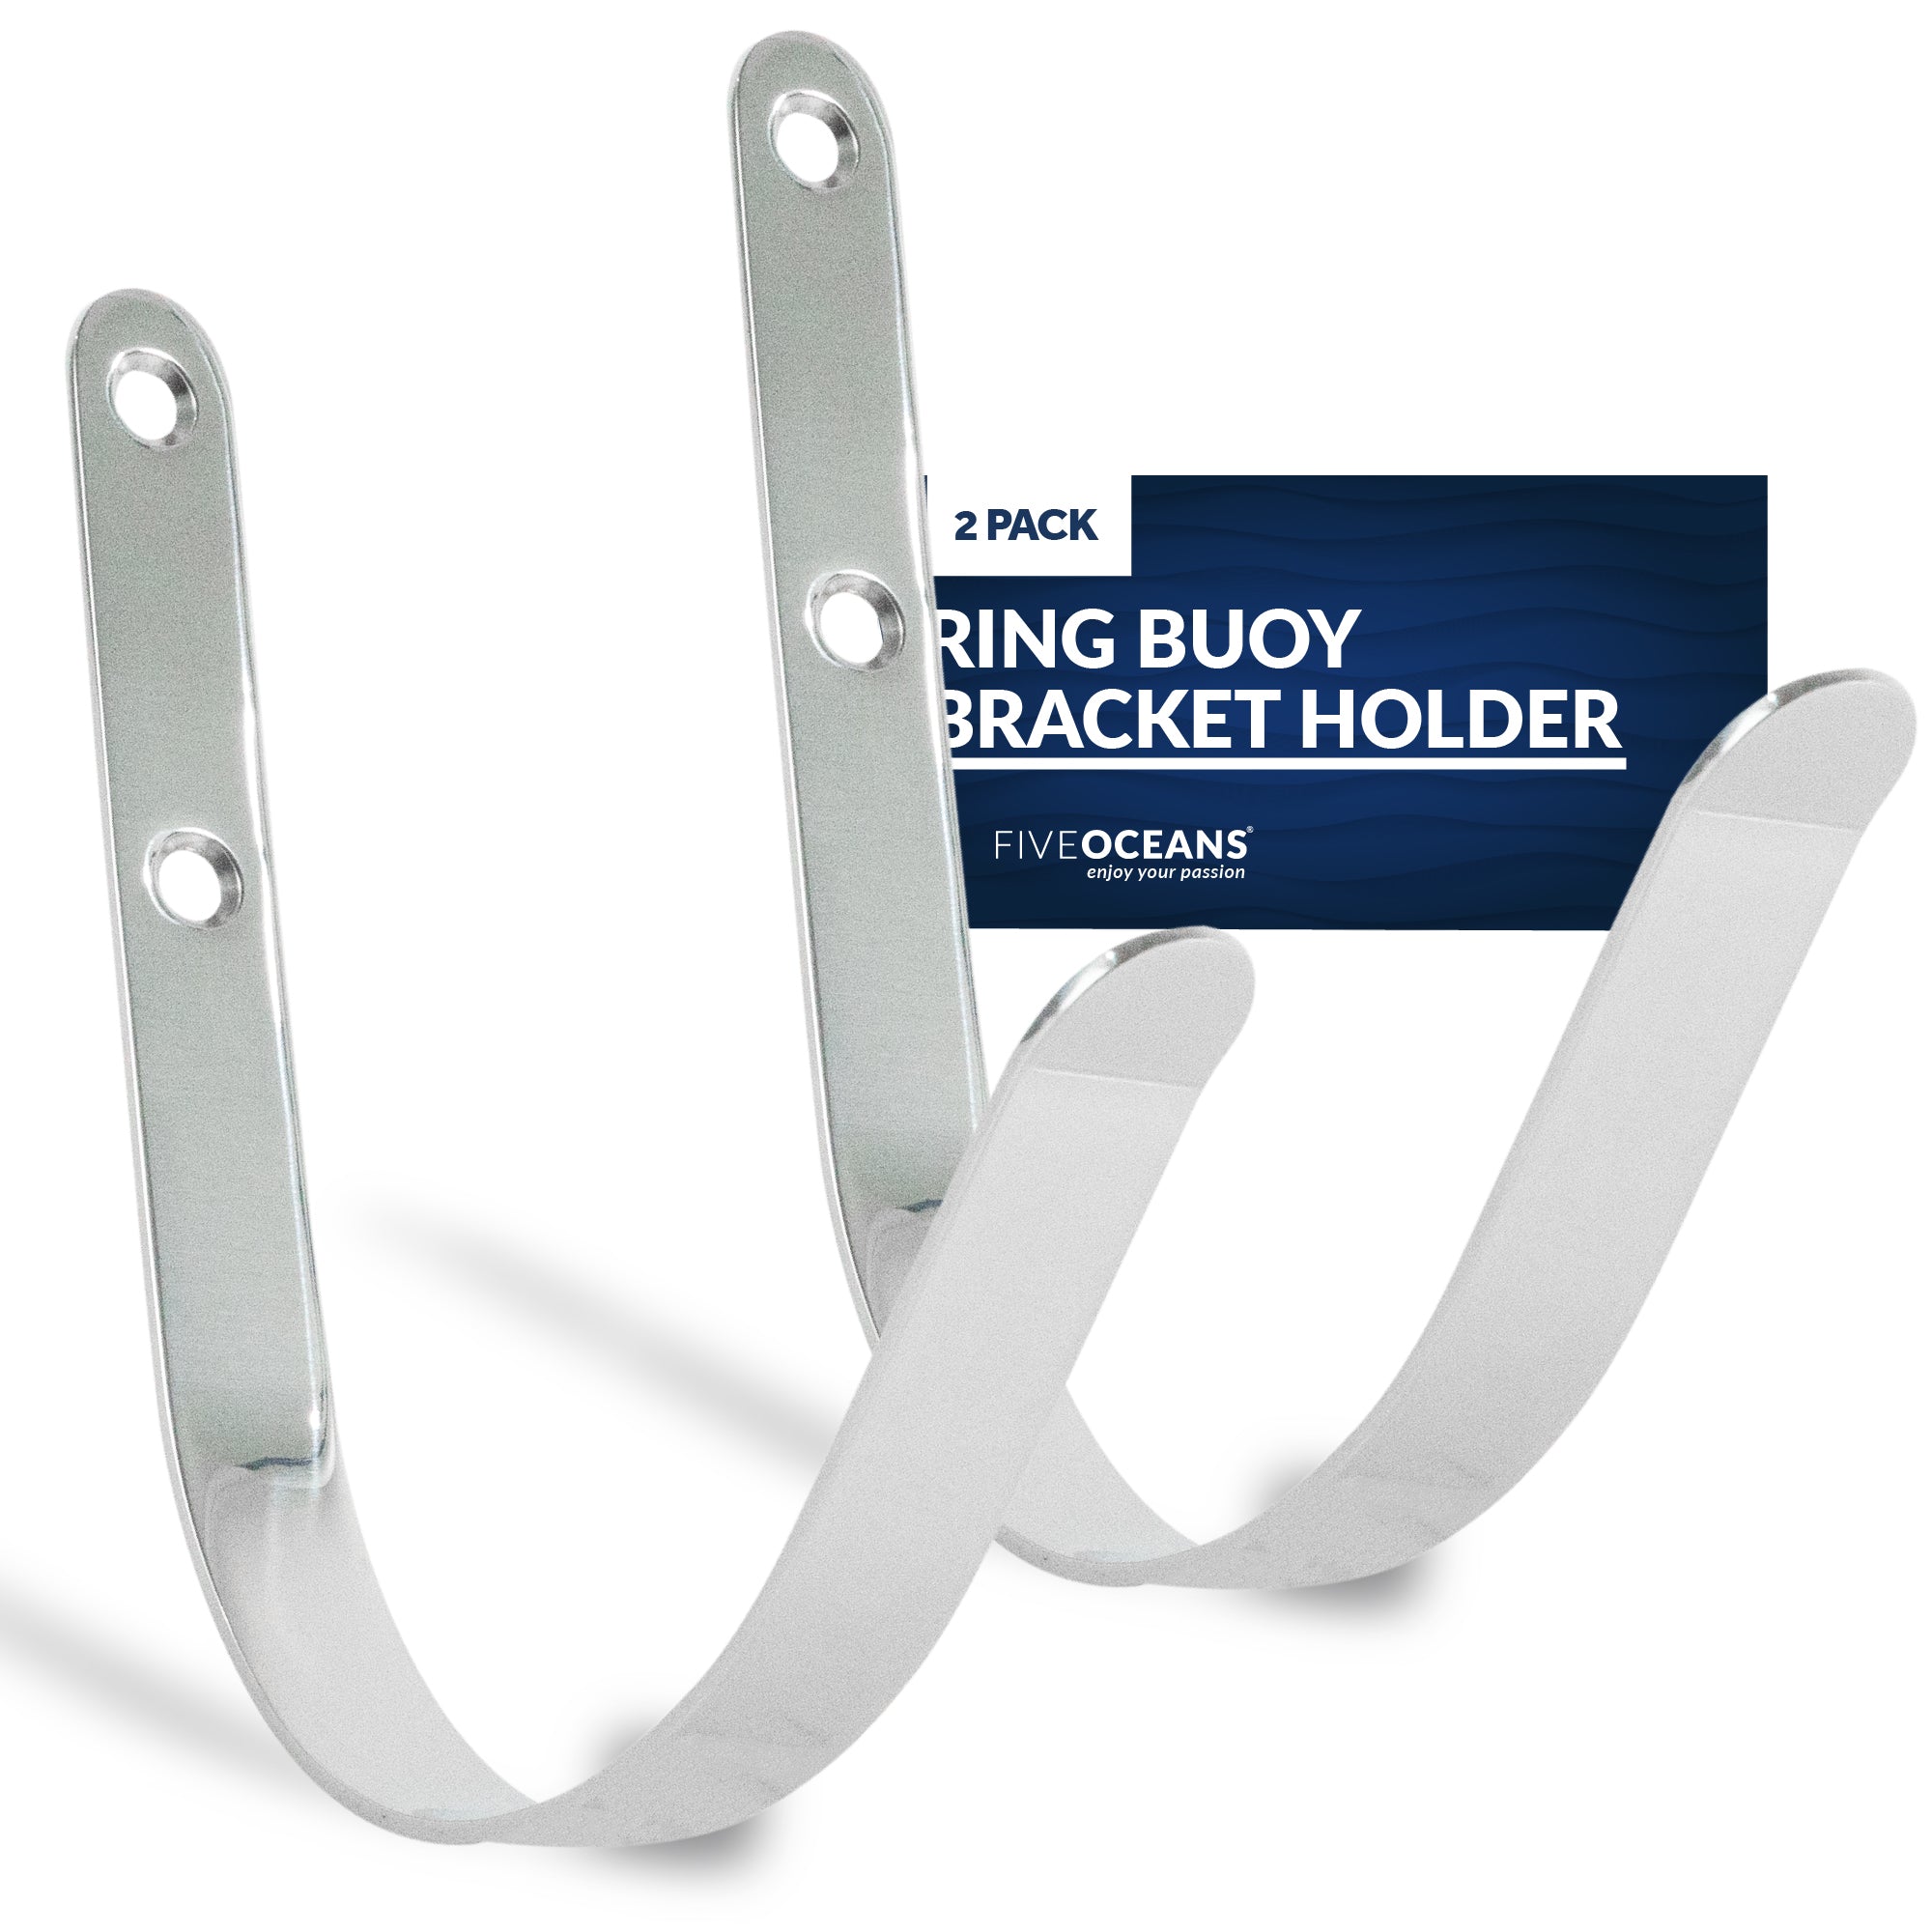 Flat Mount Ring Buoy Bracket Holder, Stainless Steel 2-Pack - FO626-M2